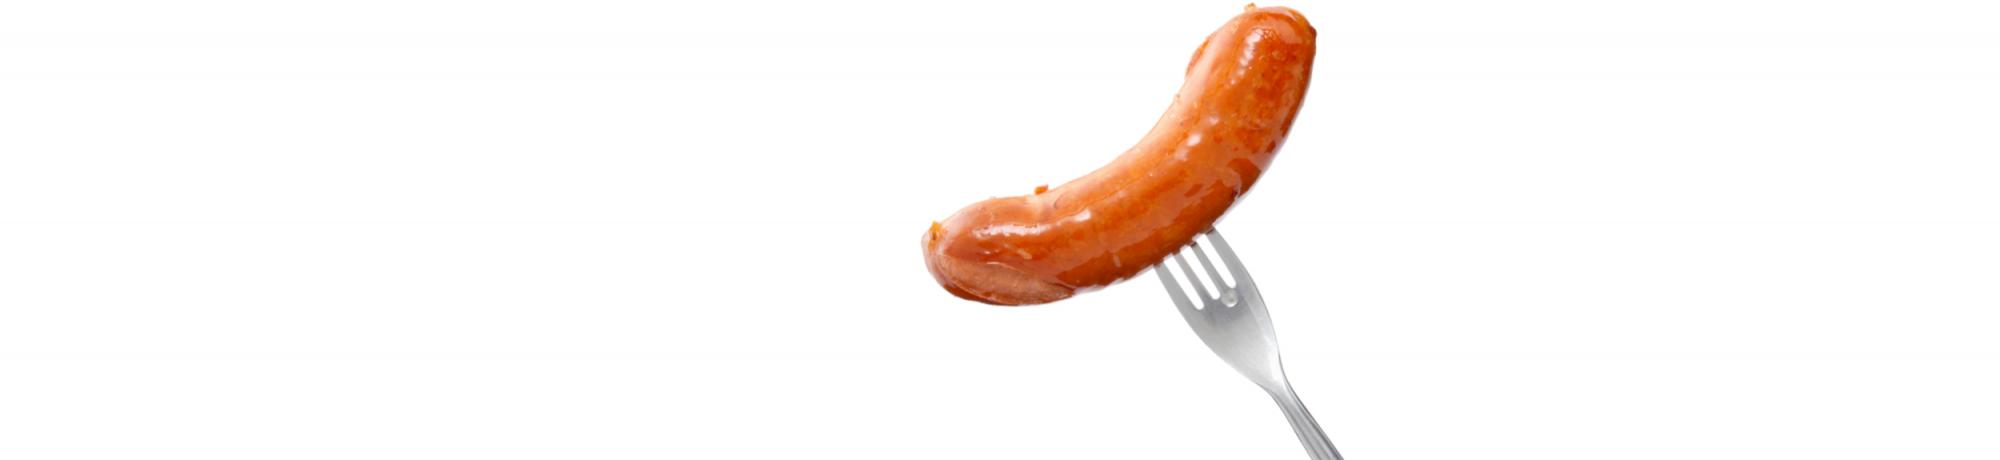 Hotdog on a fork